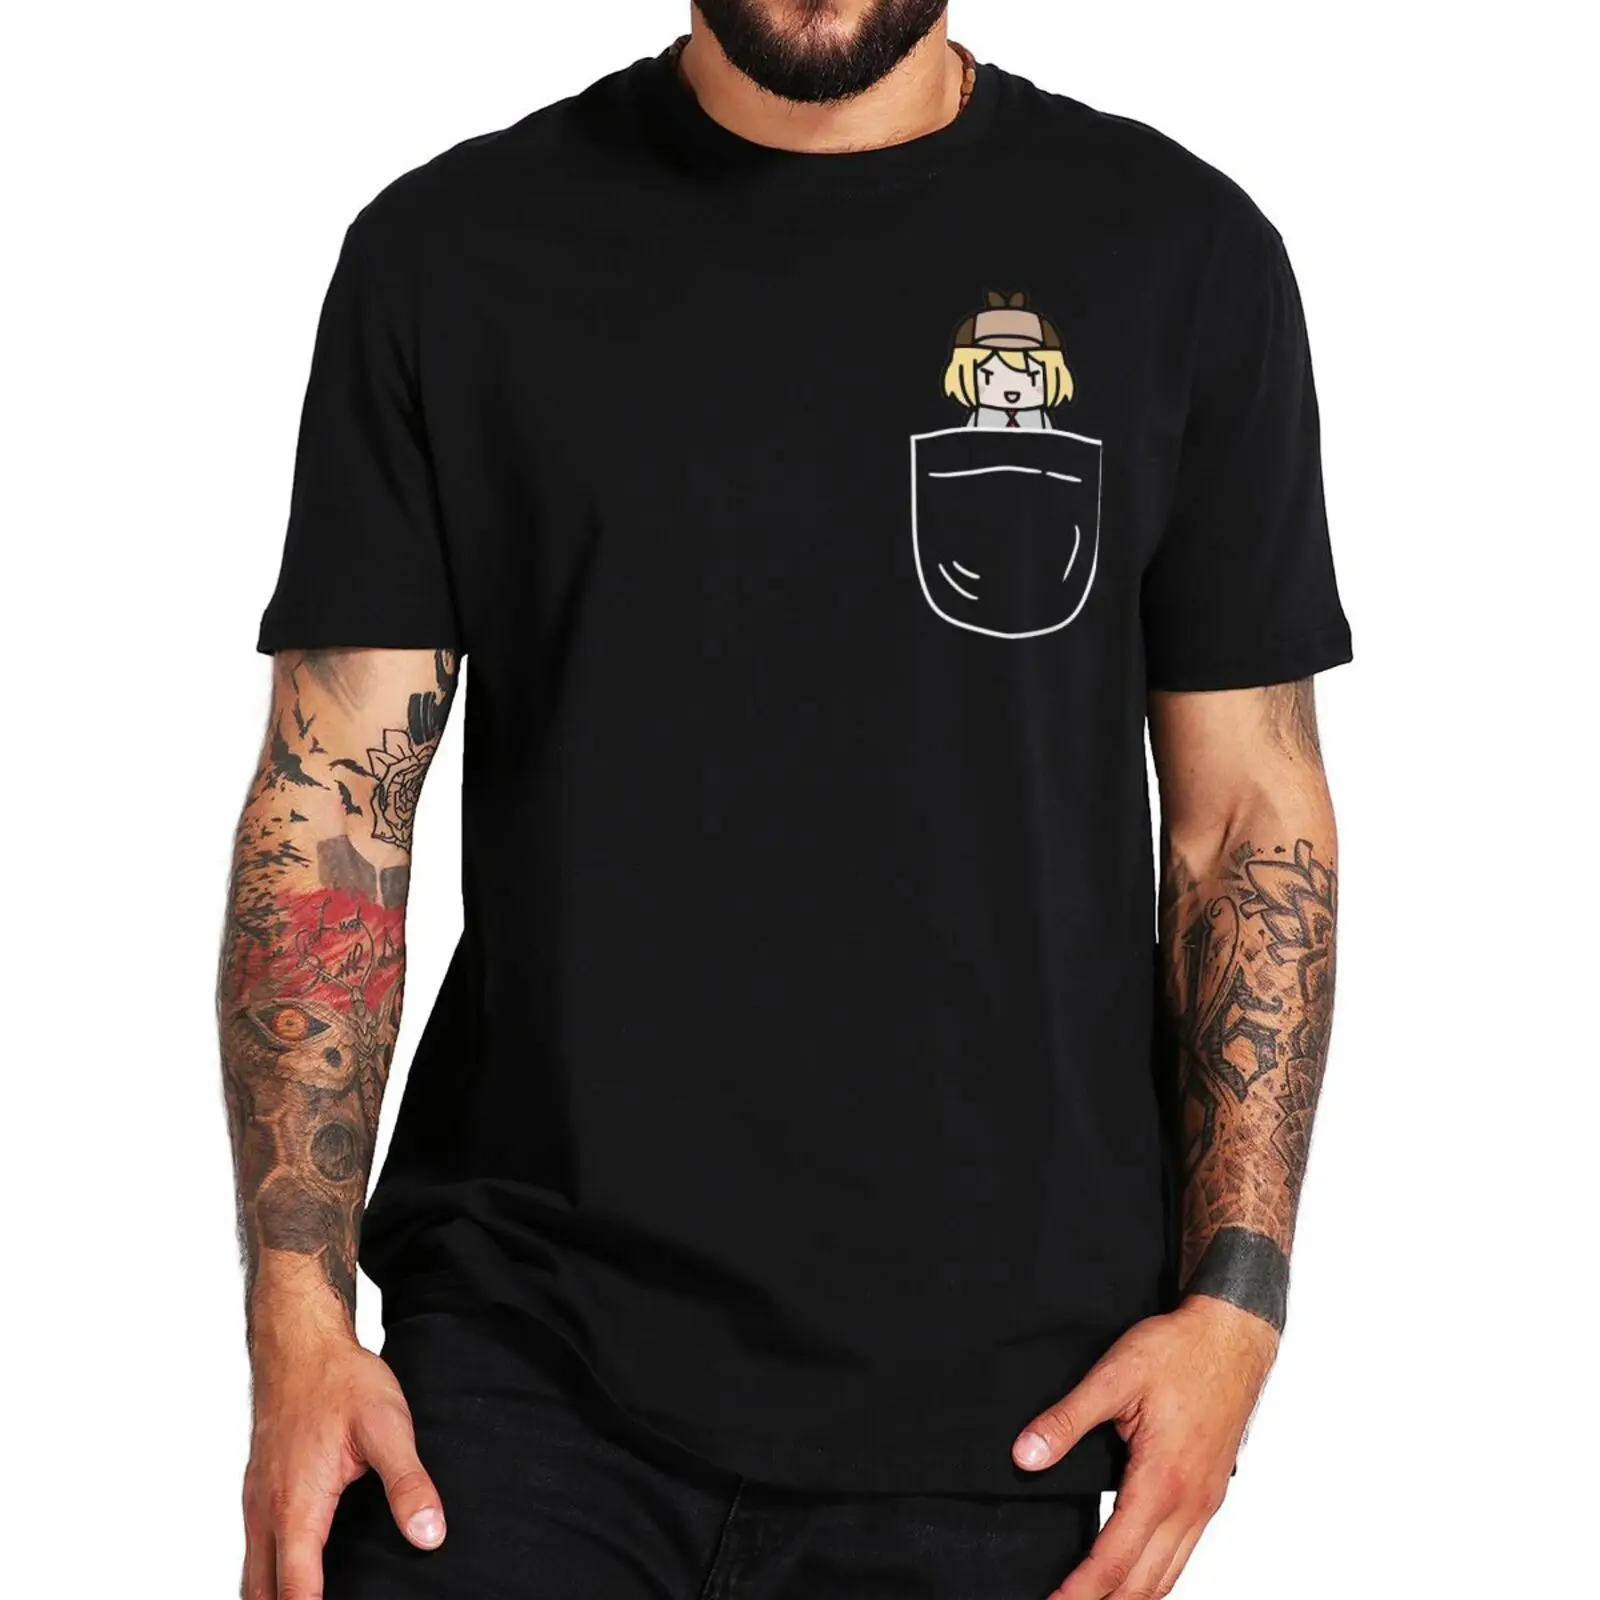 Smol Ame Pocket Mad Classic T-Shirt Amelia Watson Fans Art Design T Shirt 100% Cotton Summer Basic Premium Tee Tops EU Size